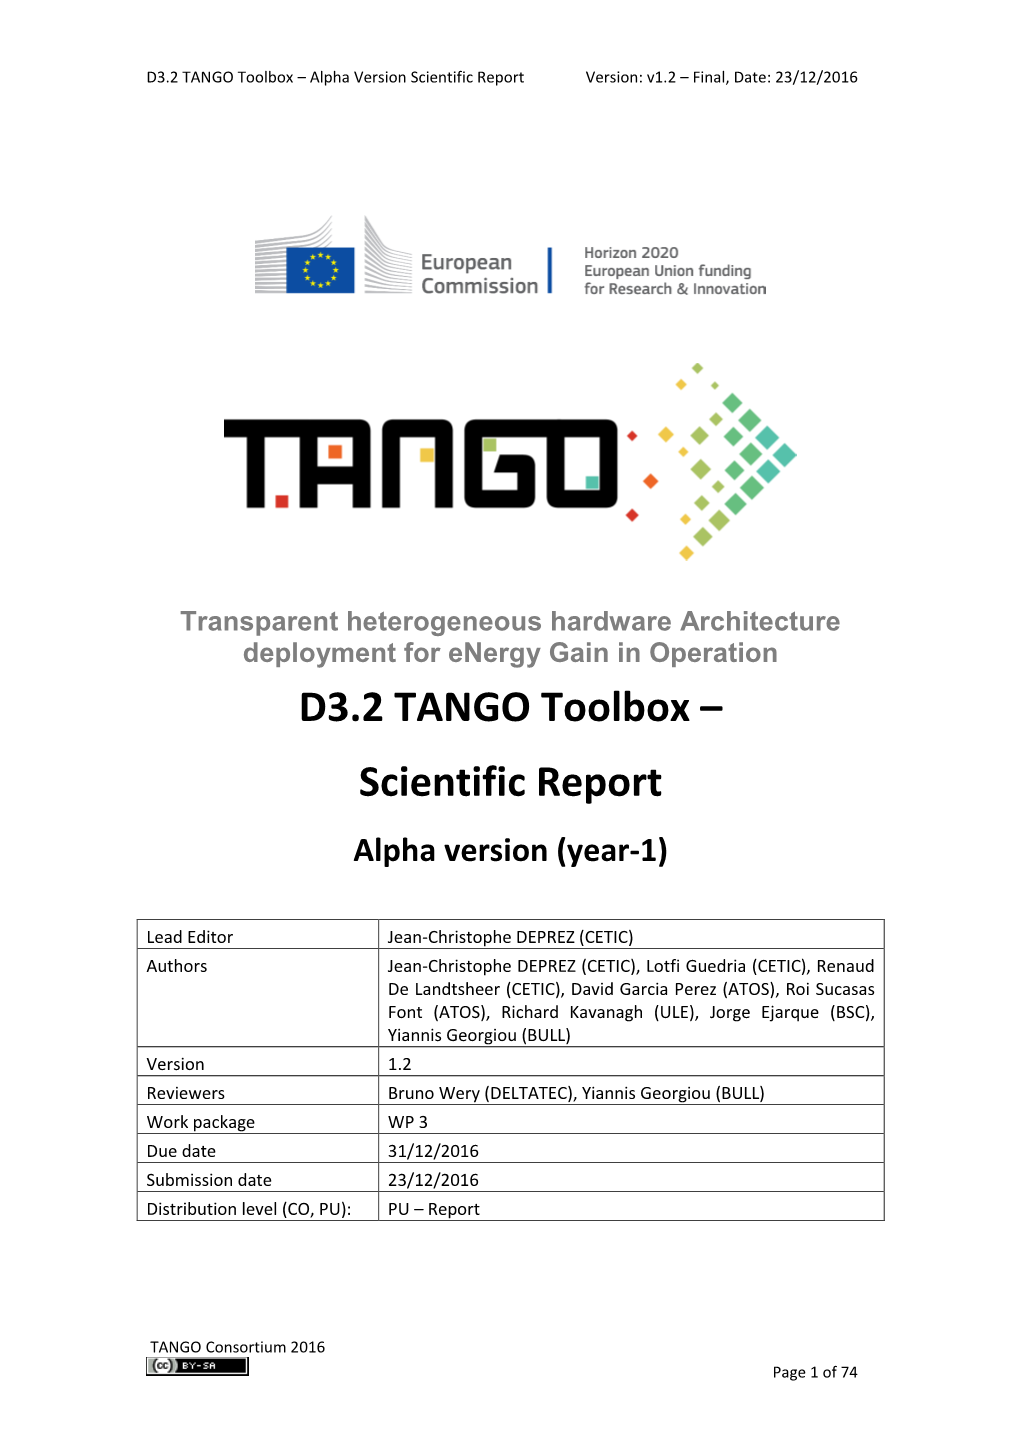 D3.2 TANGO Toolbox – Scientific Report Alpha Version (Year-1)